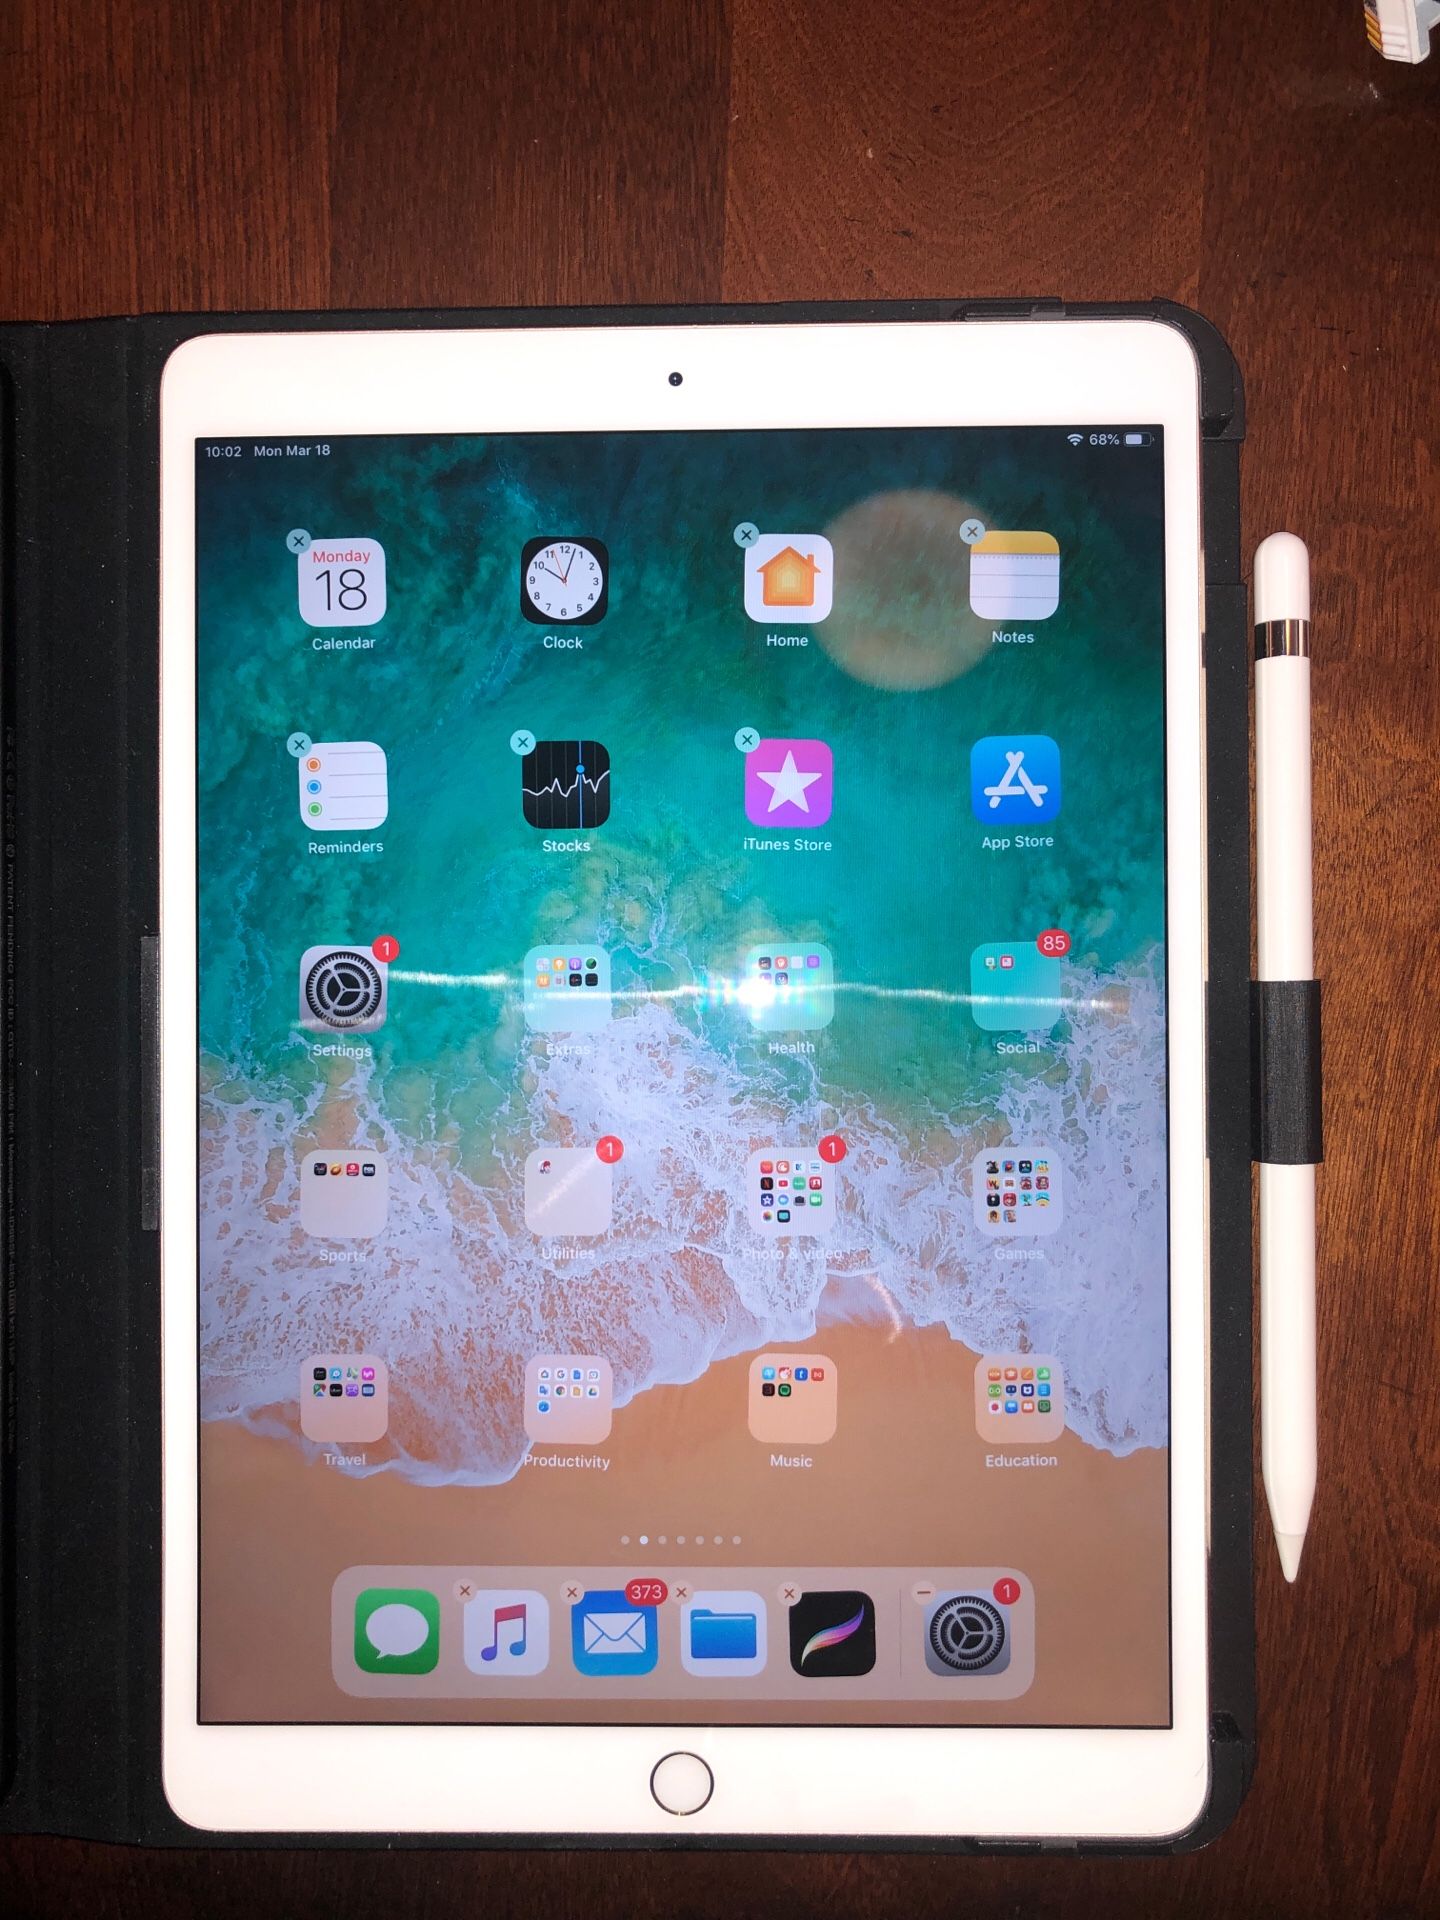 iPad Pro 10.5 inch